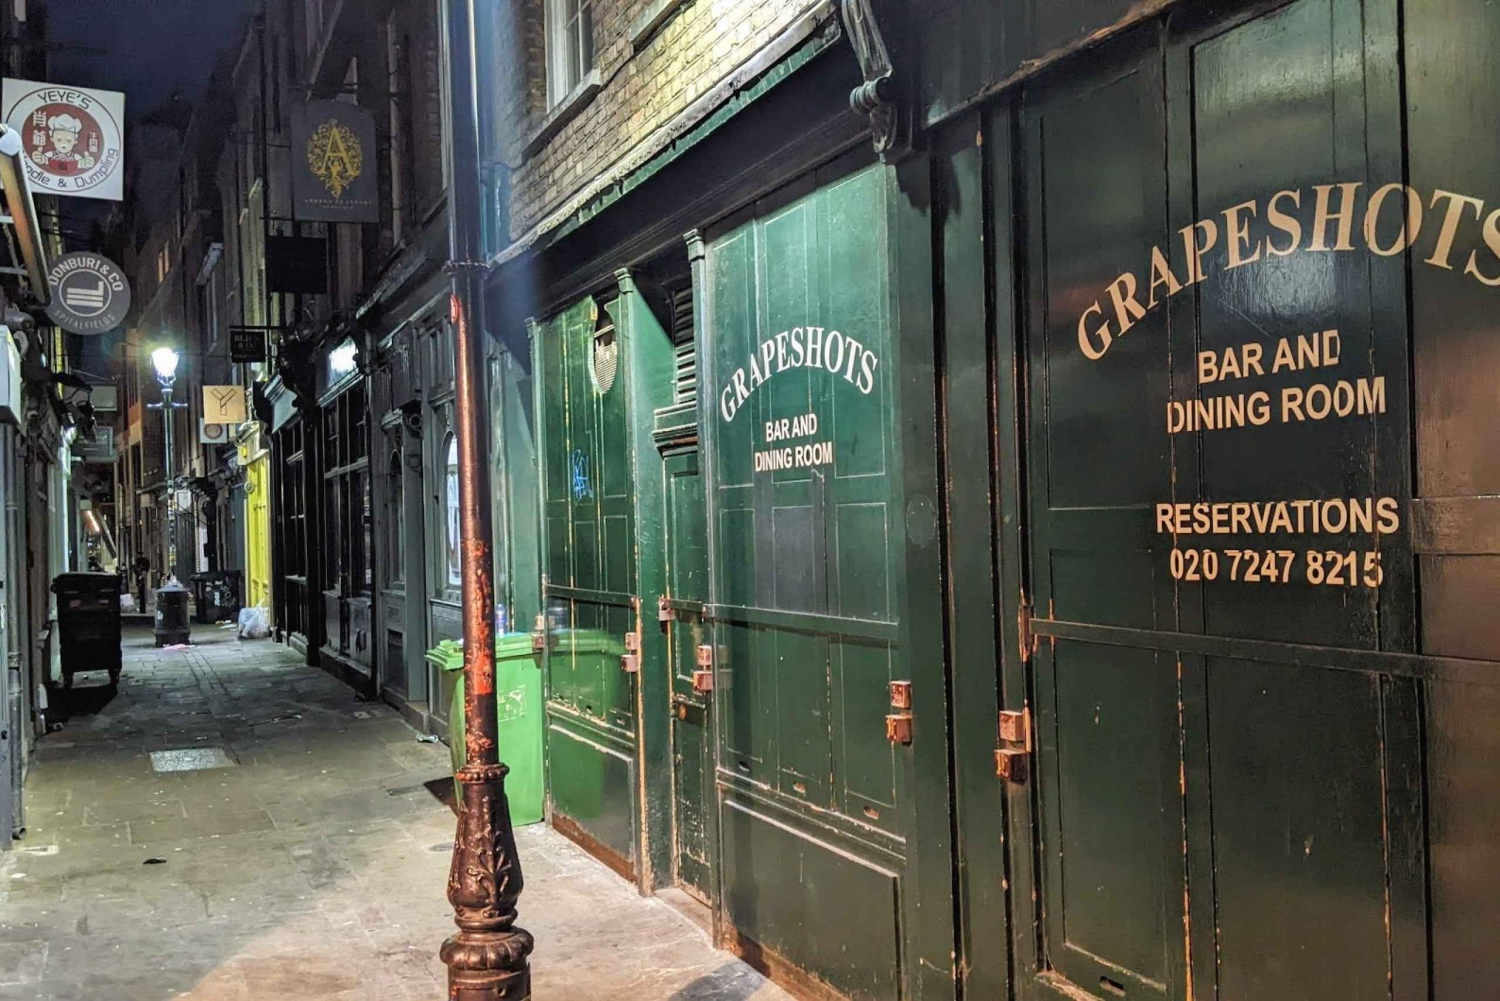 London: Jack the Ripper Private Self-guided Walk